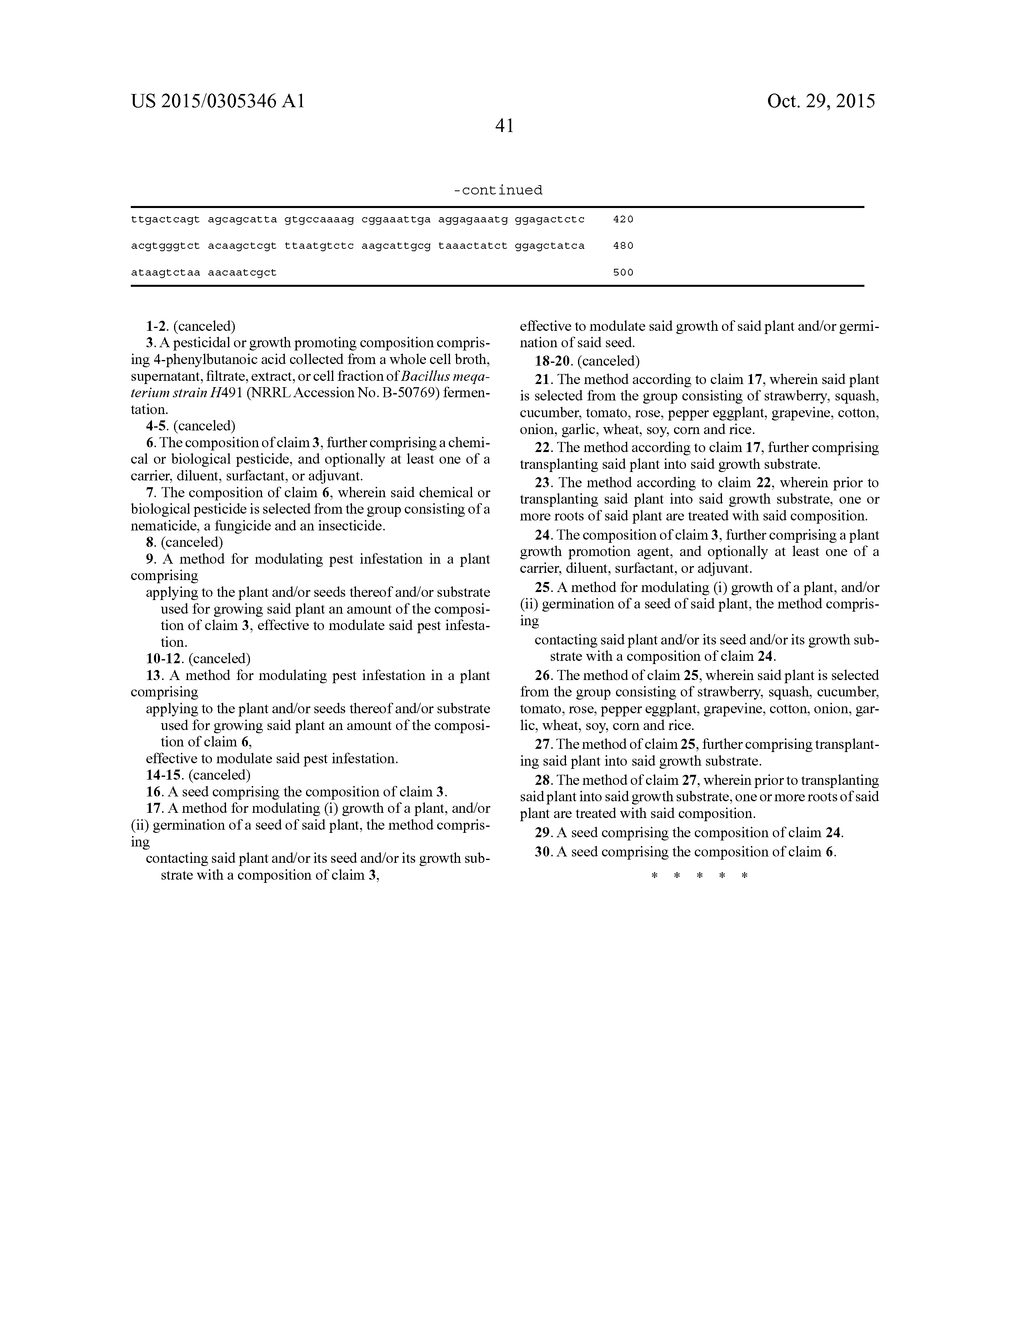 BACILLUS MEGATERIUM BIOACTIVE COMPOSITIONS AND METABOLITES - diagram, schematic, and image 53